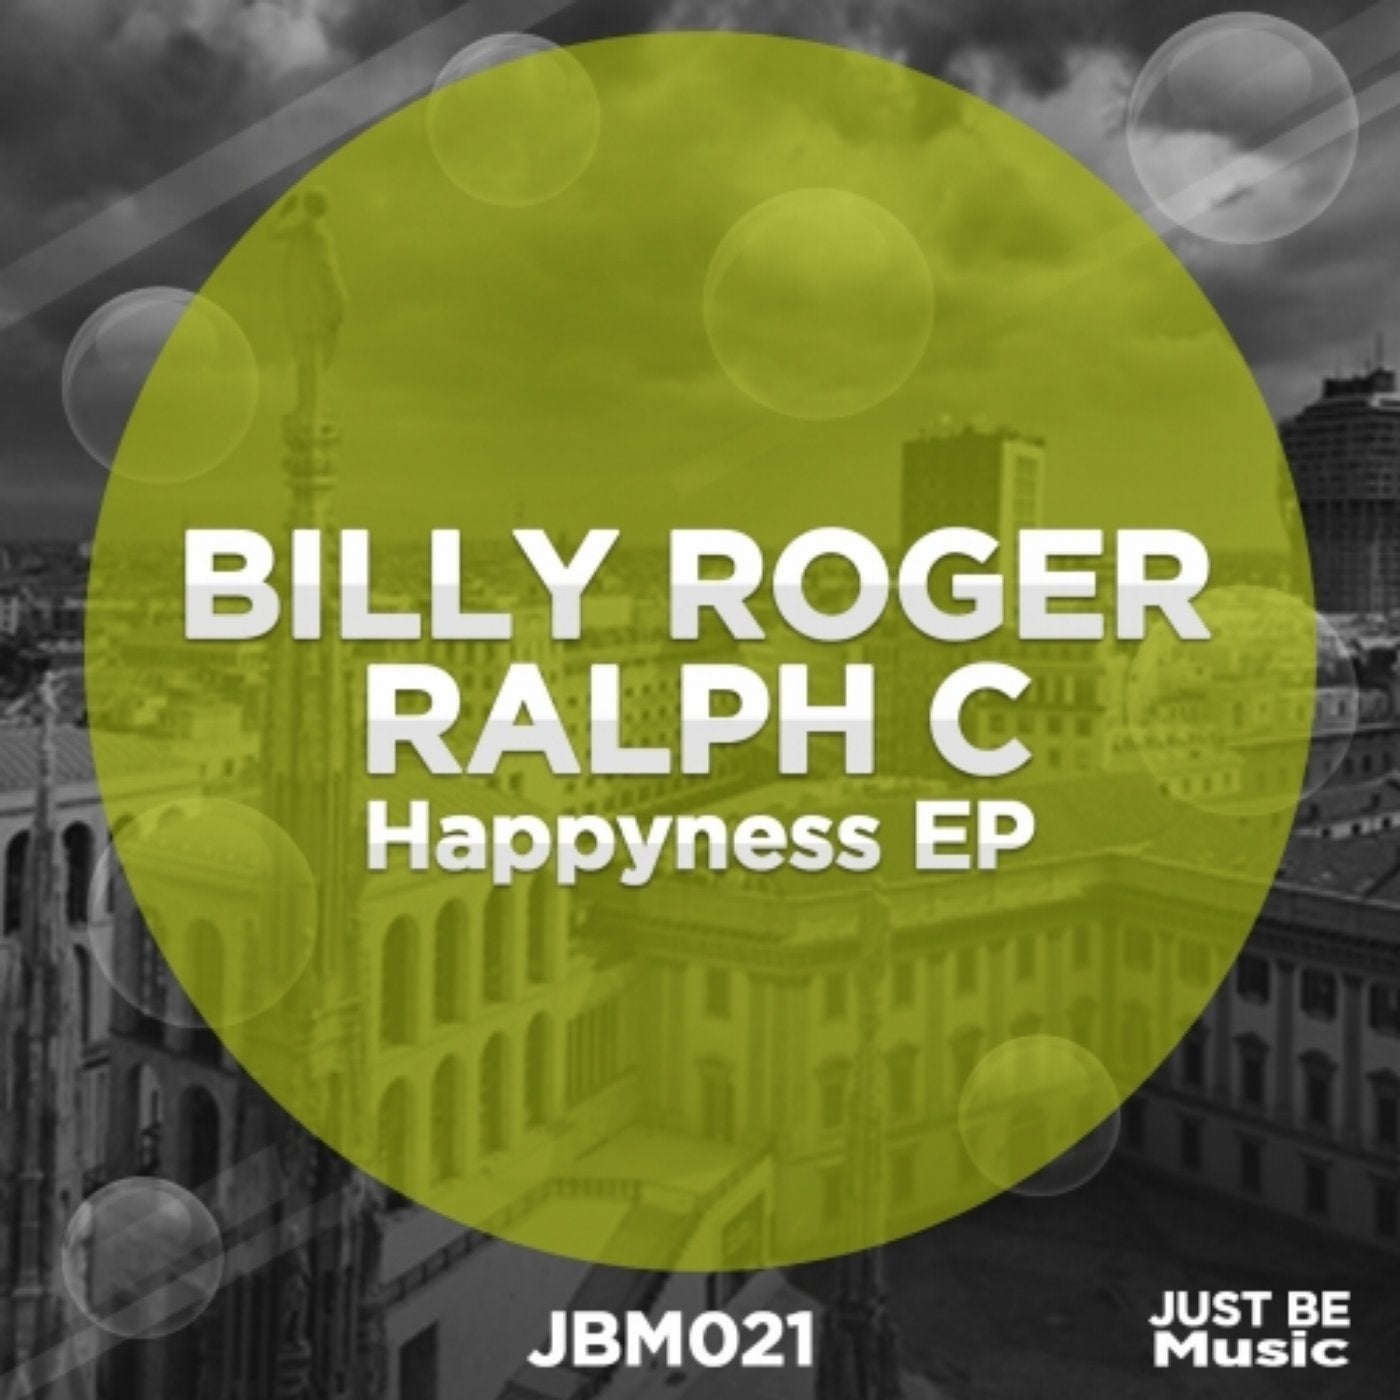 Happyness EP